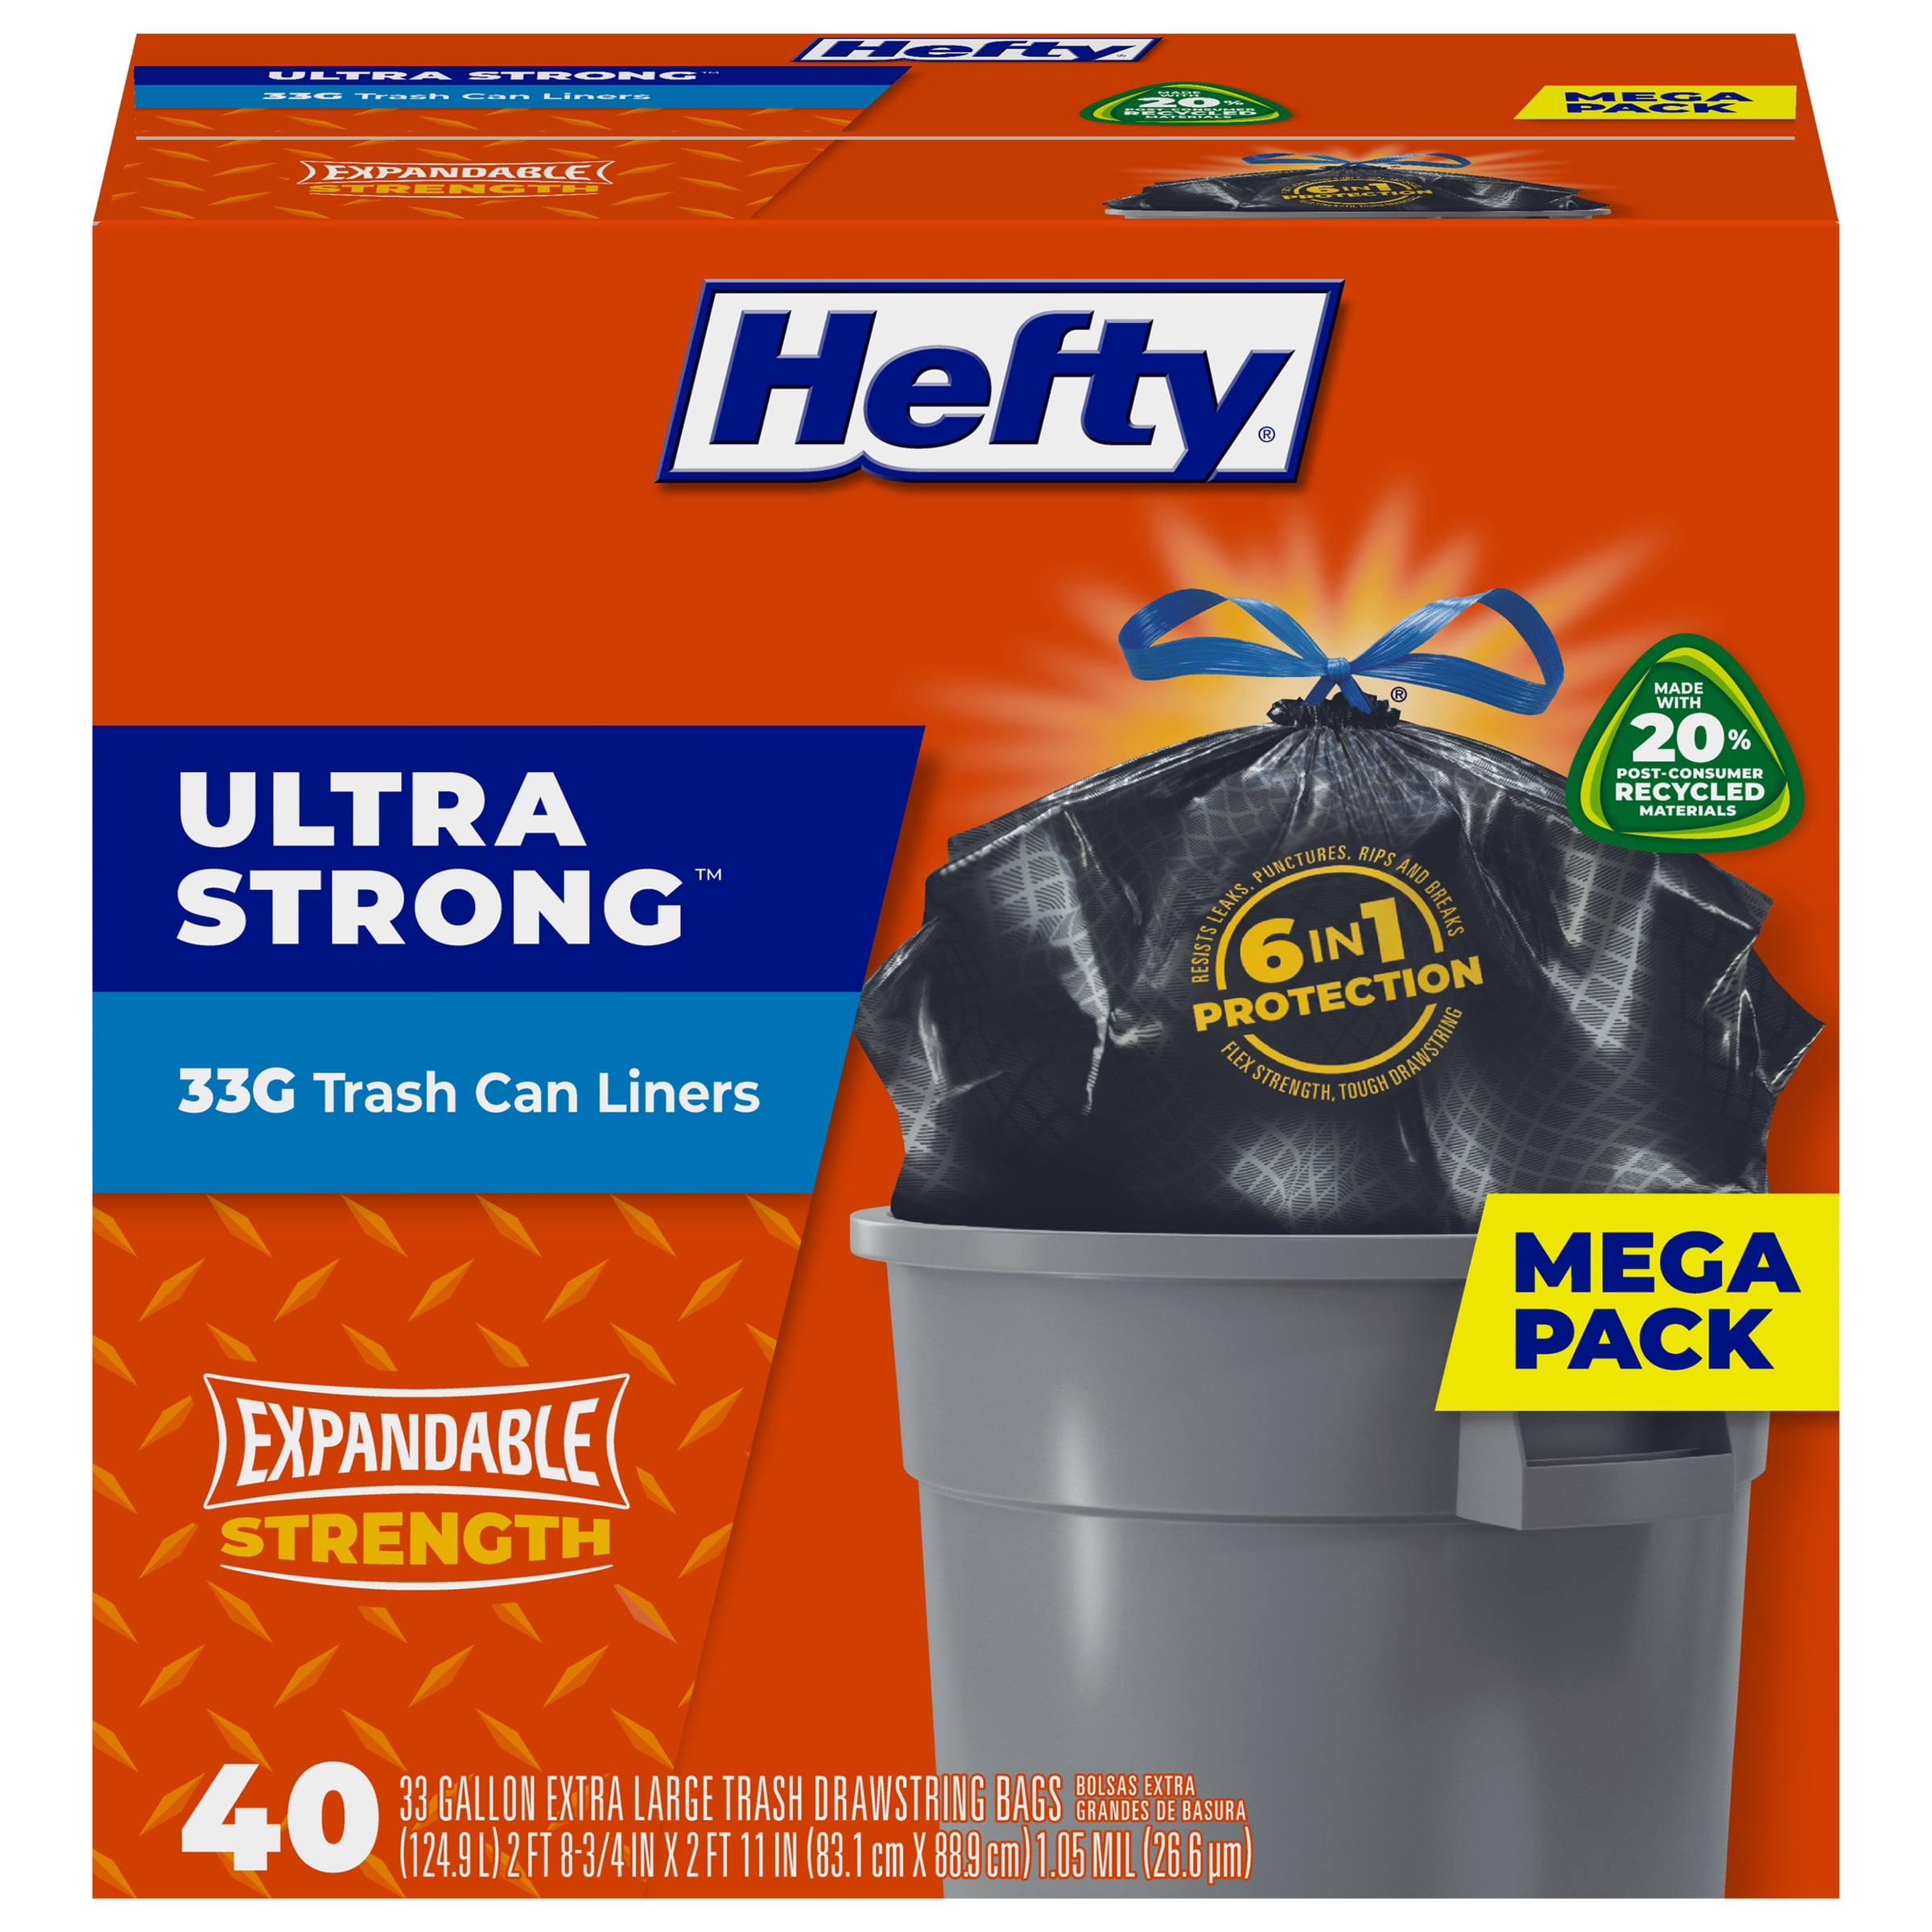 Hefty Strong 33-Gallon Extra Large Drawstring Bags Mega Pack, 48